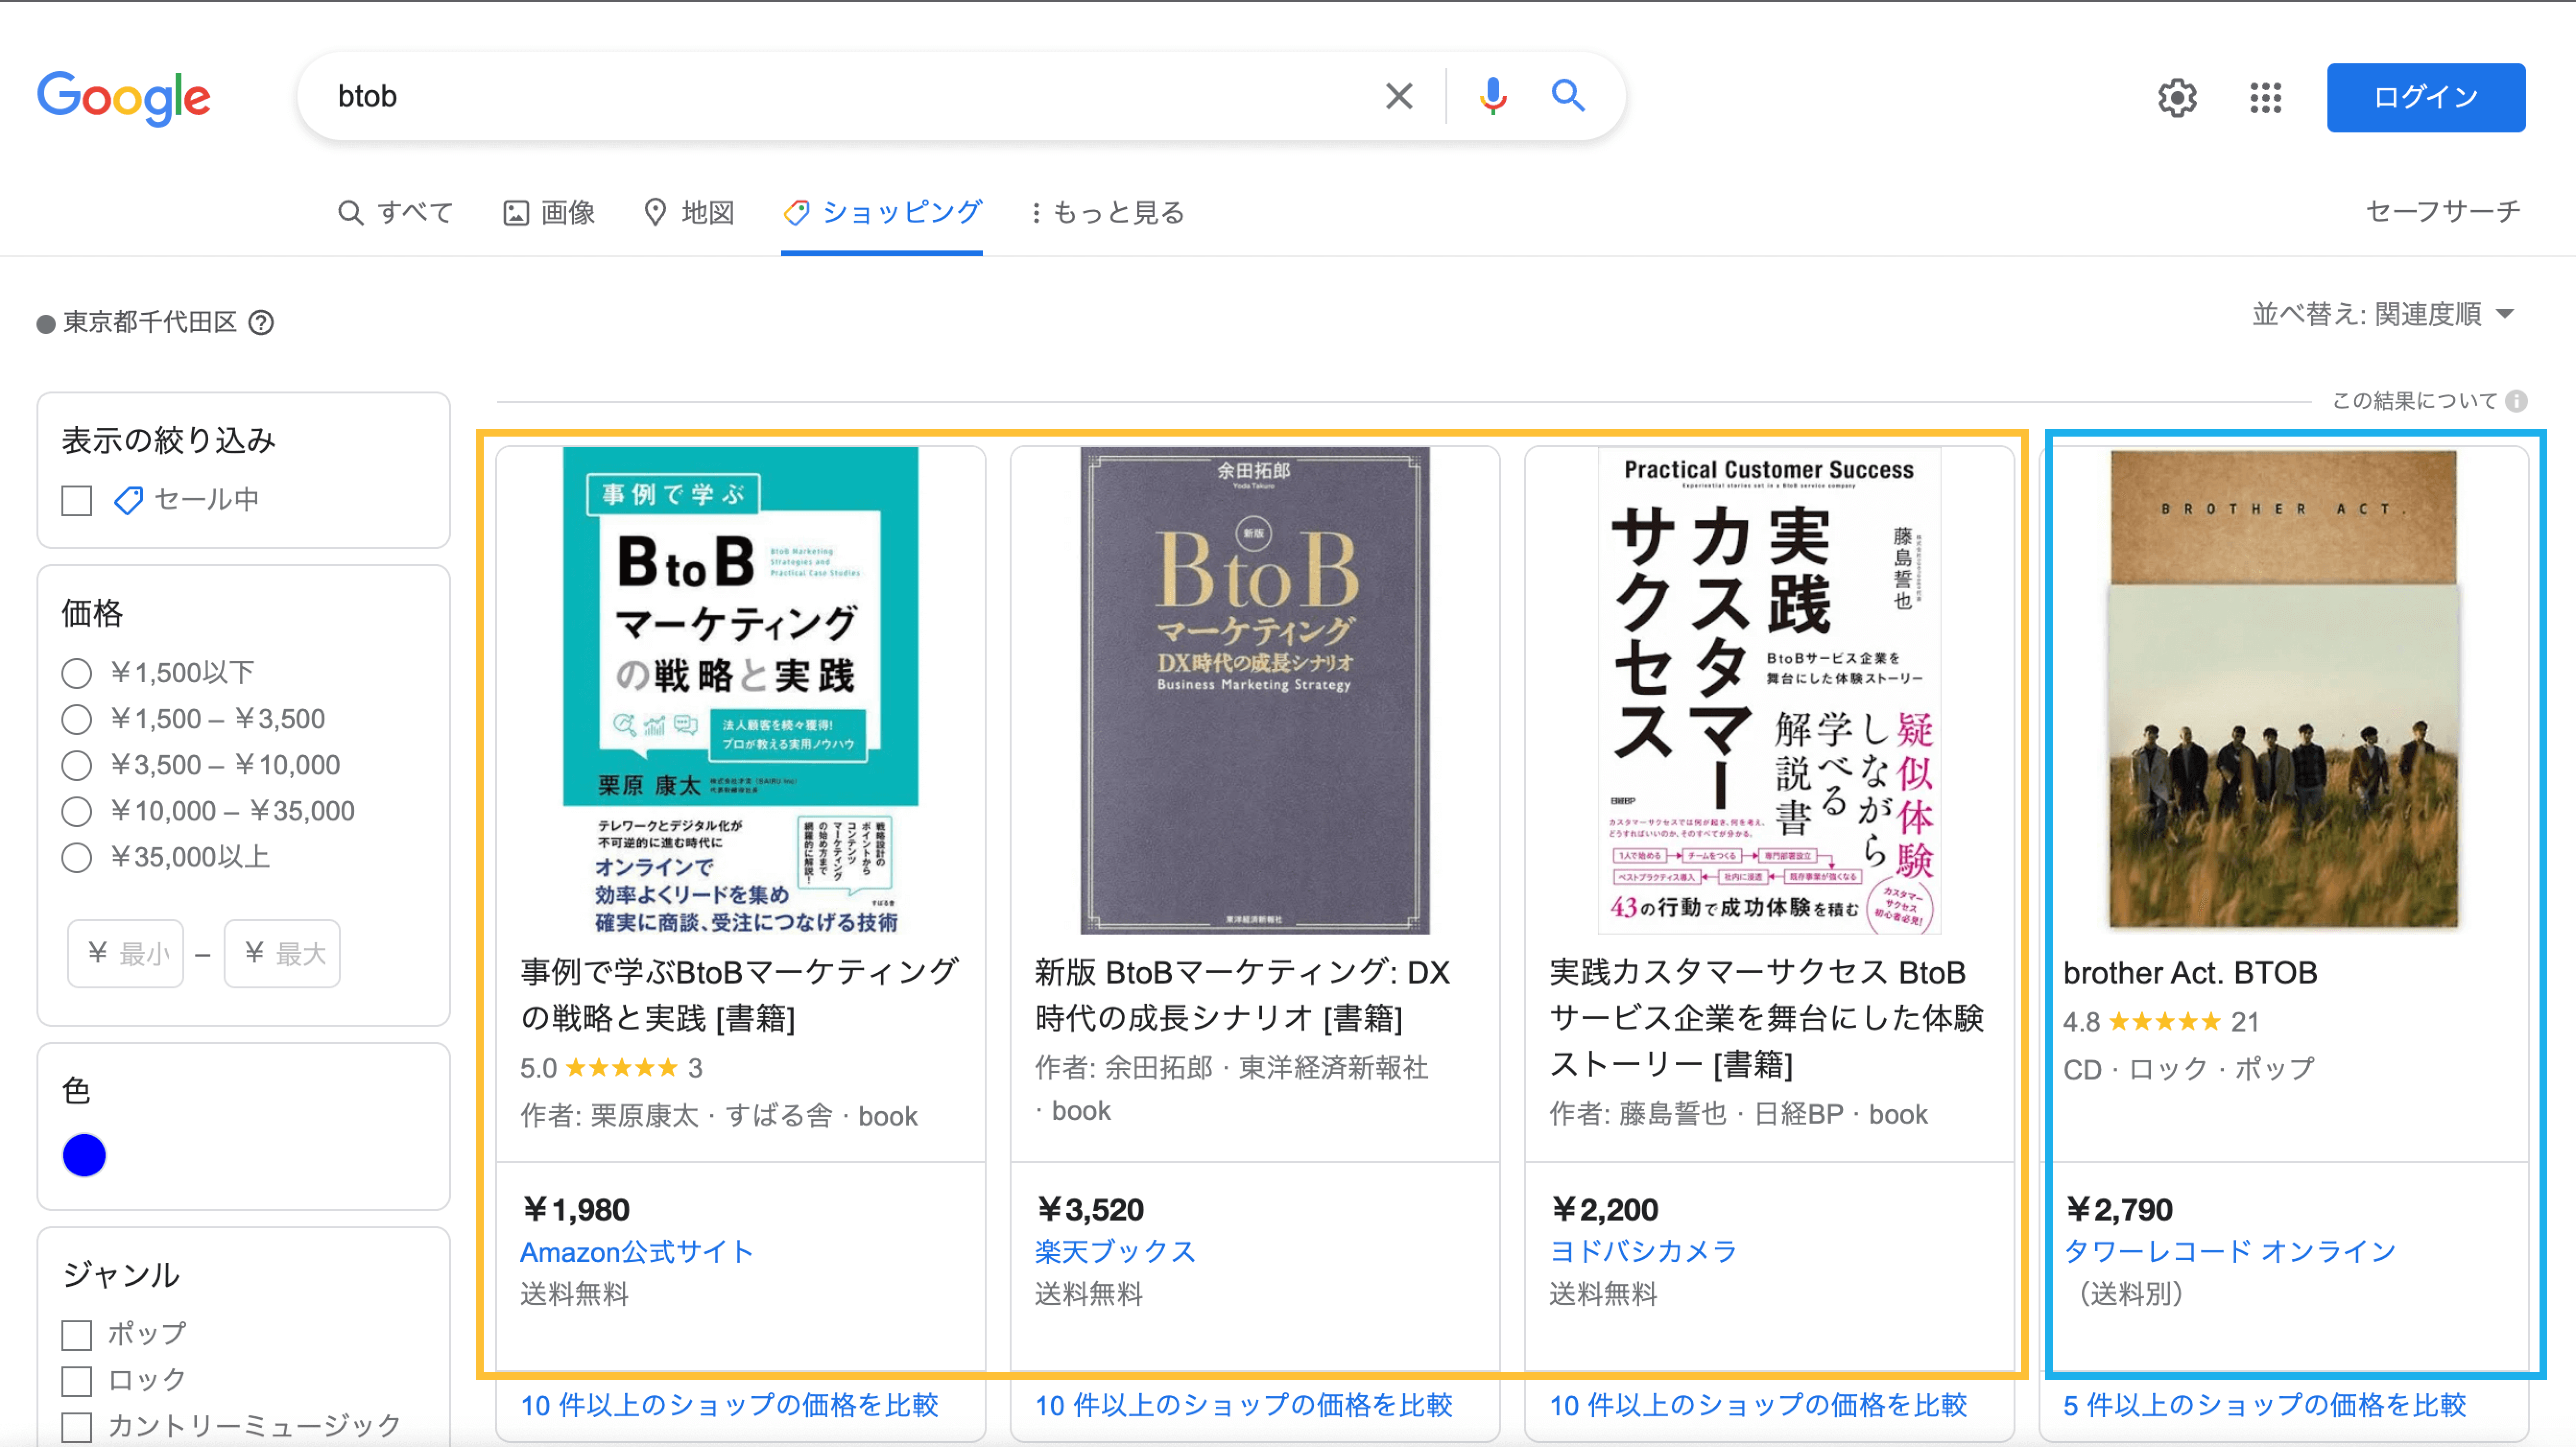 「btob」でのショッピング検索の結果画面